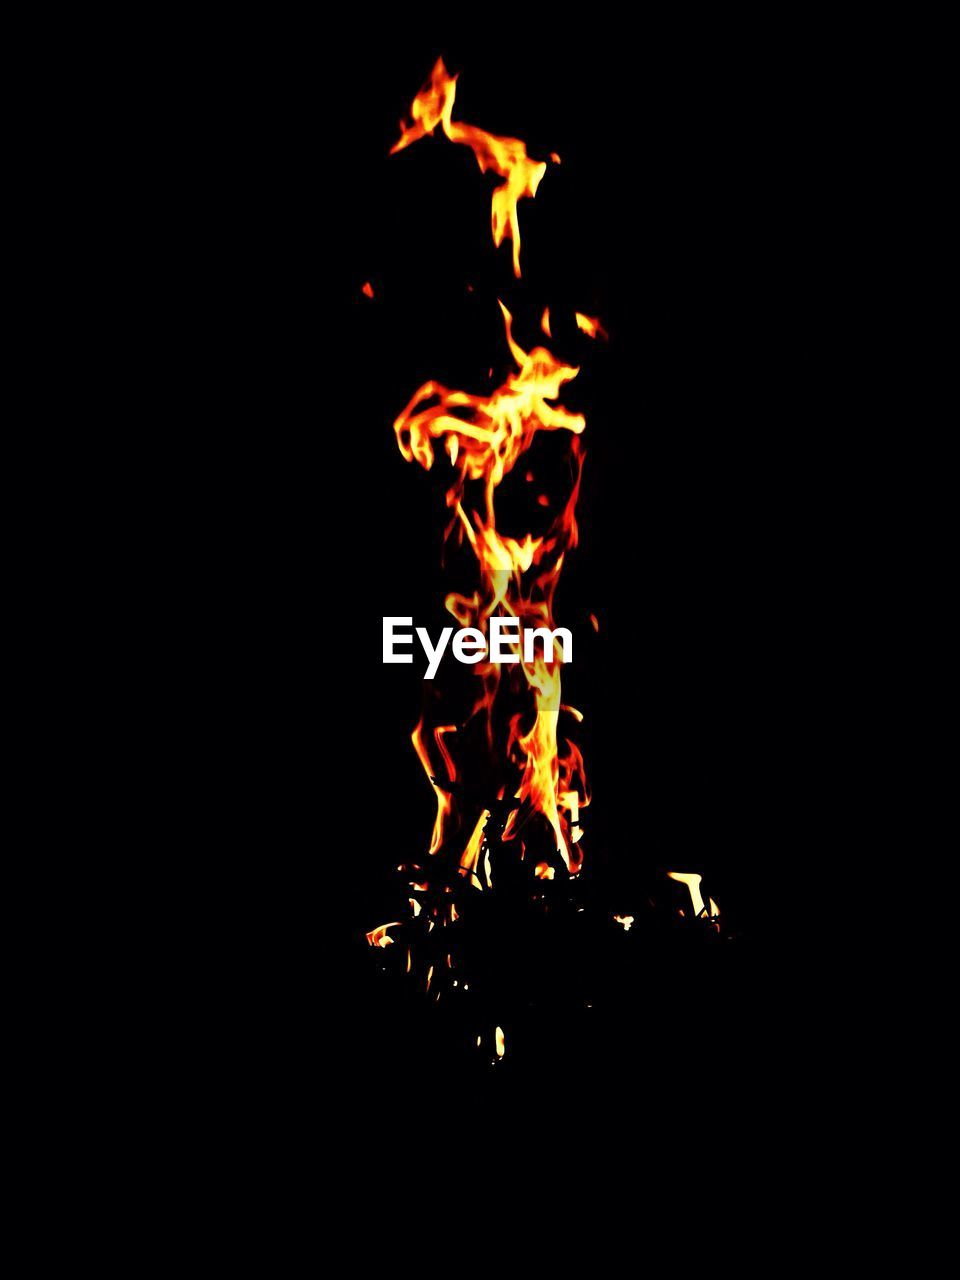 VIEW OF FIRE IN DARK ROOM